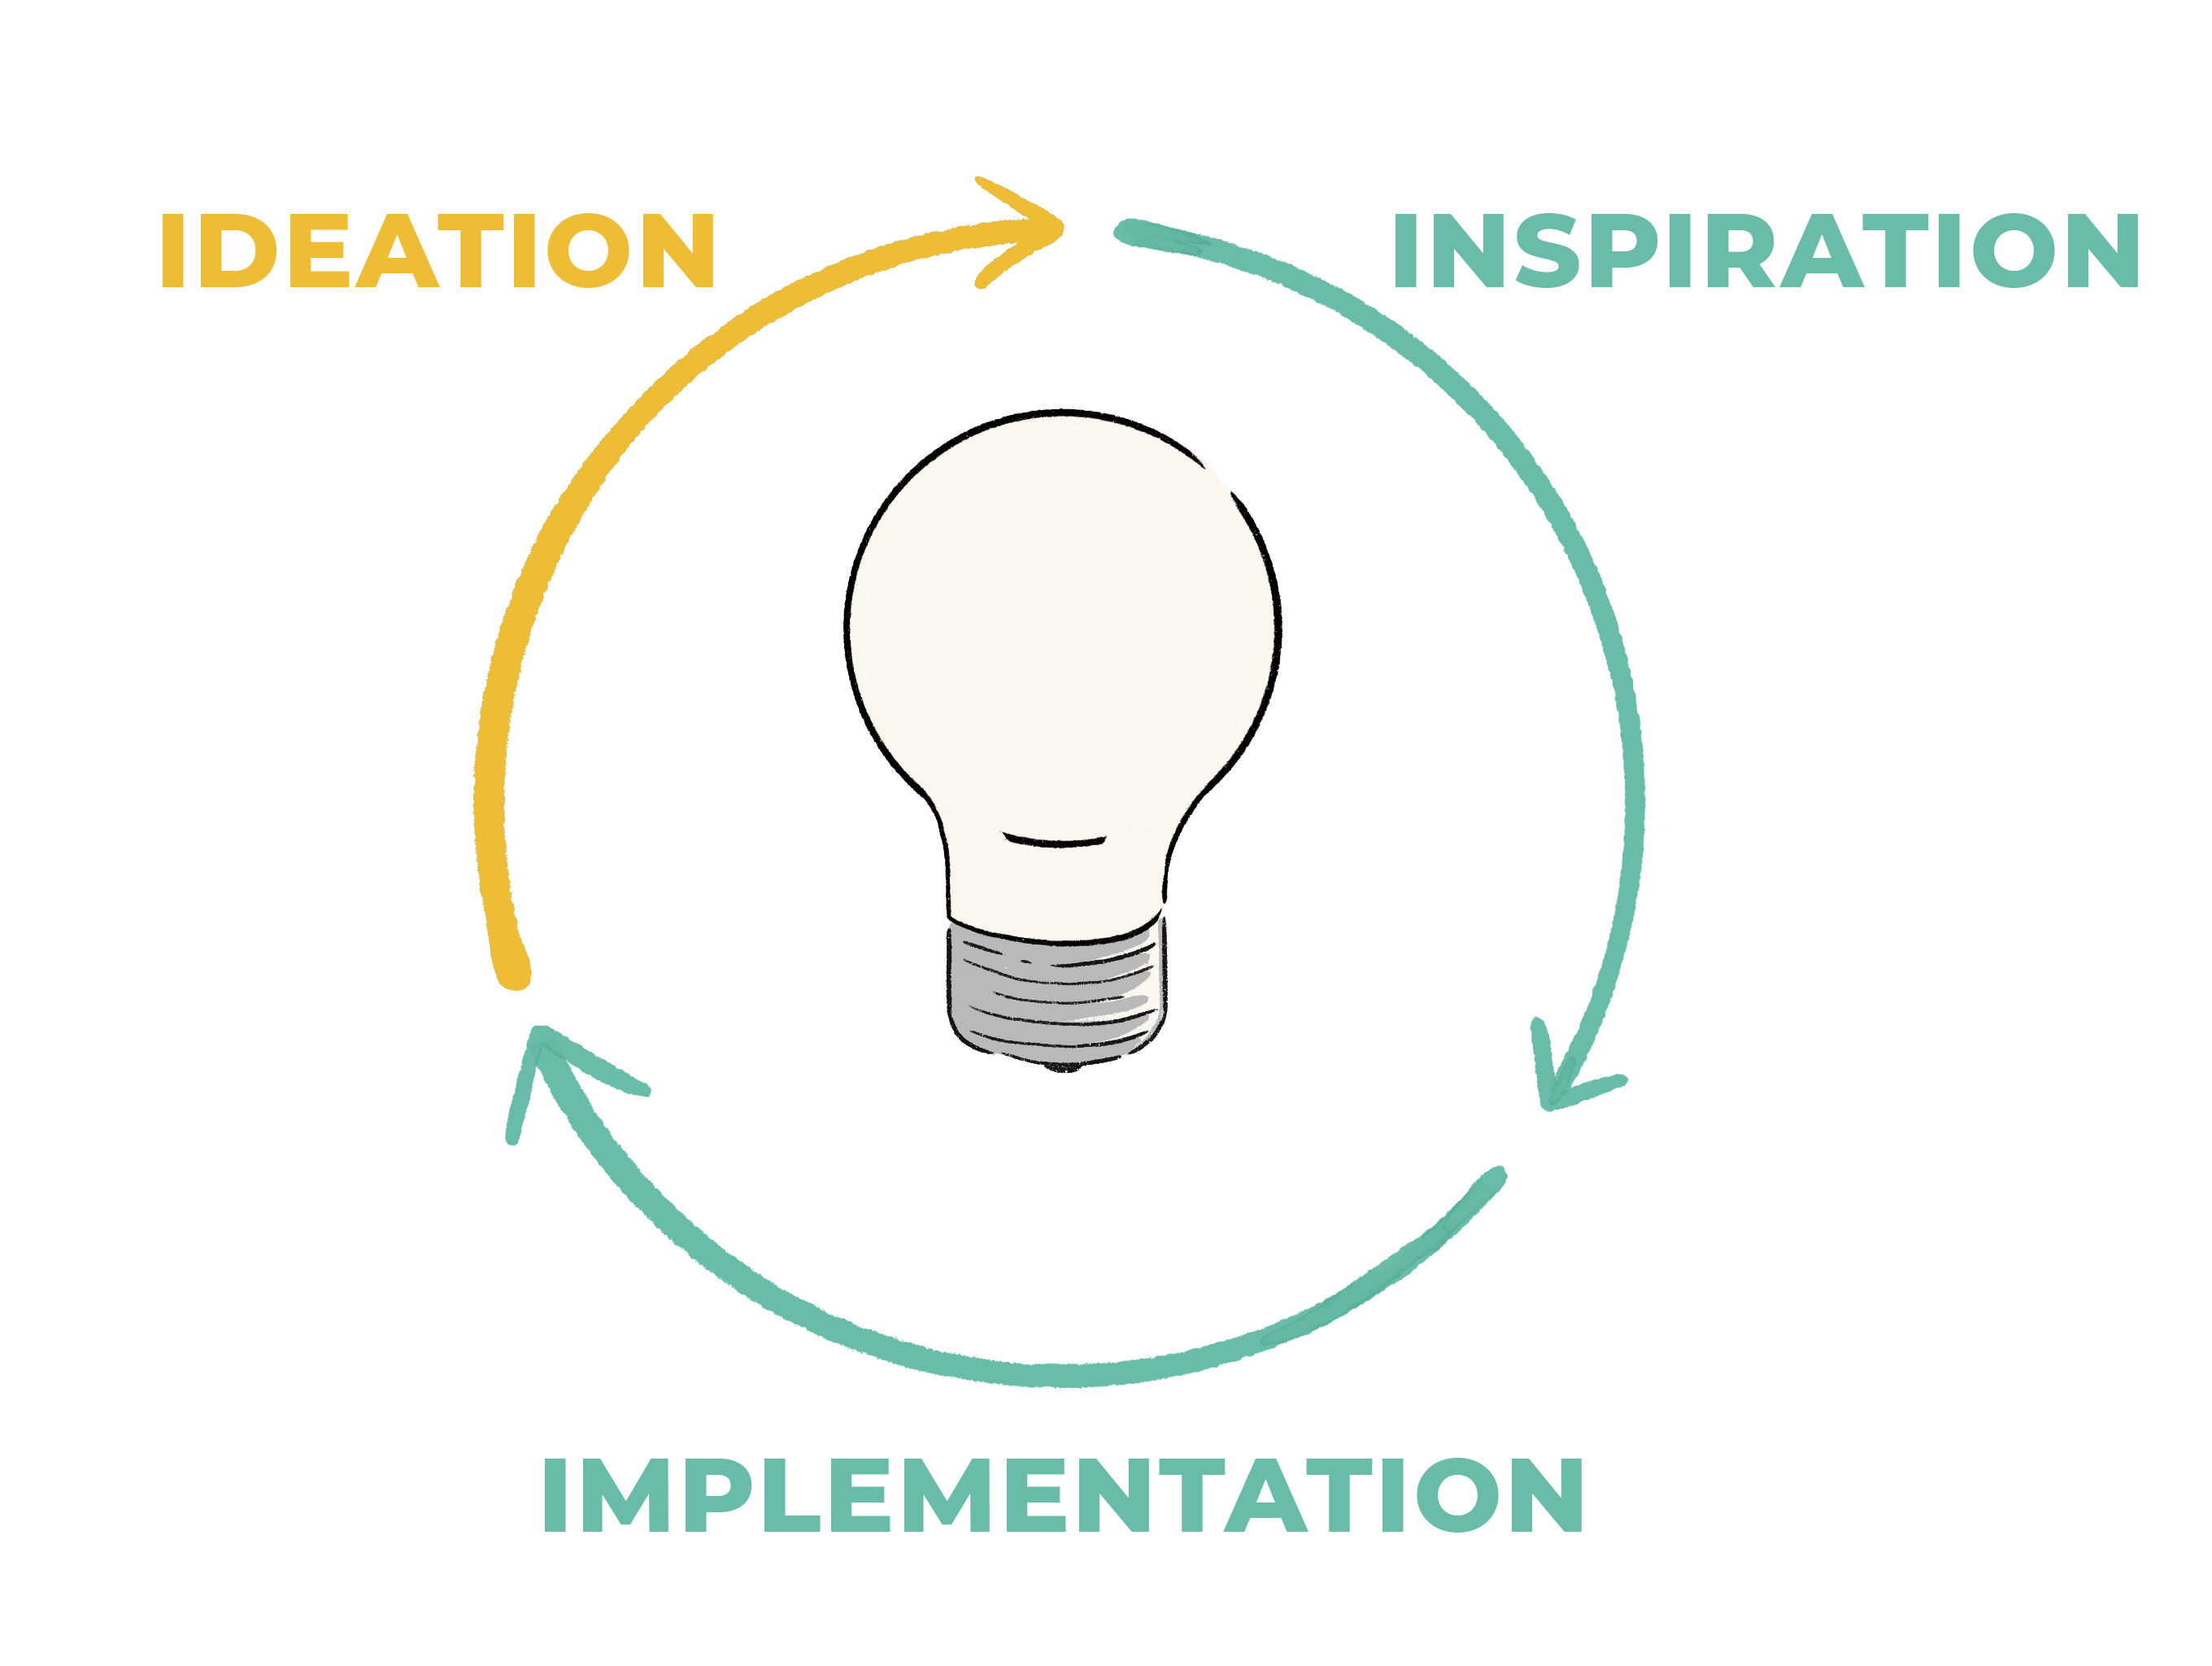 Inspiration > Ideation > Implementation